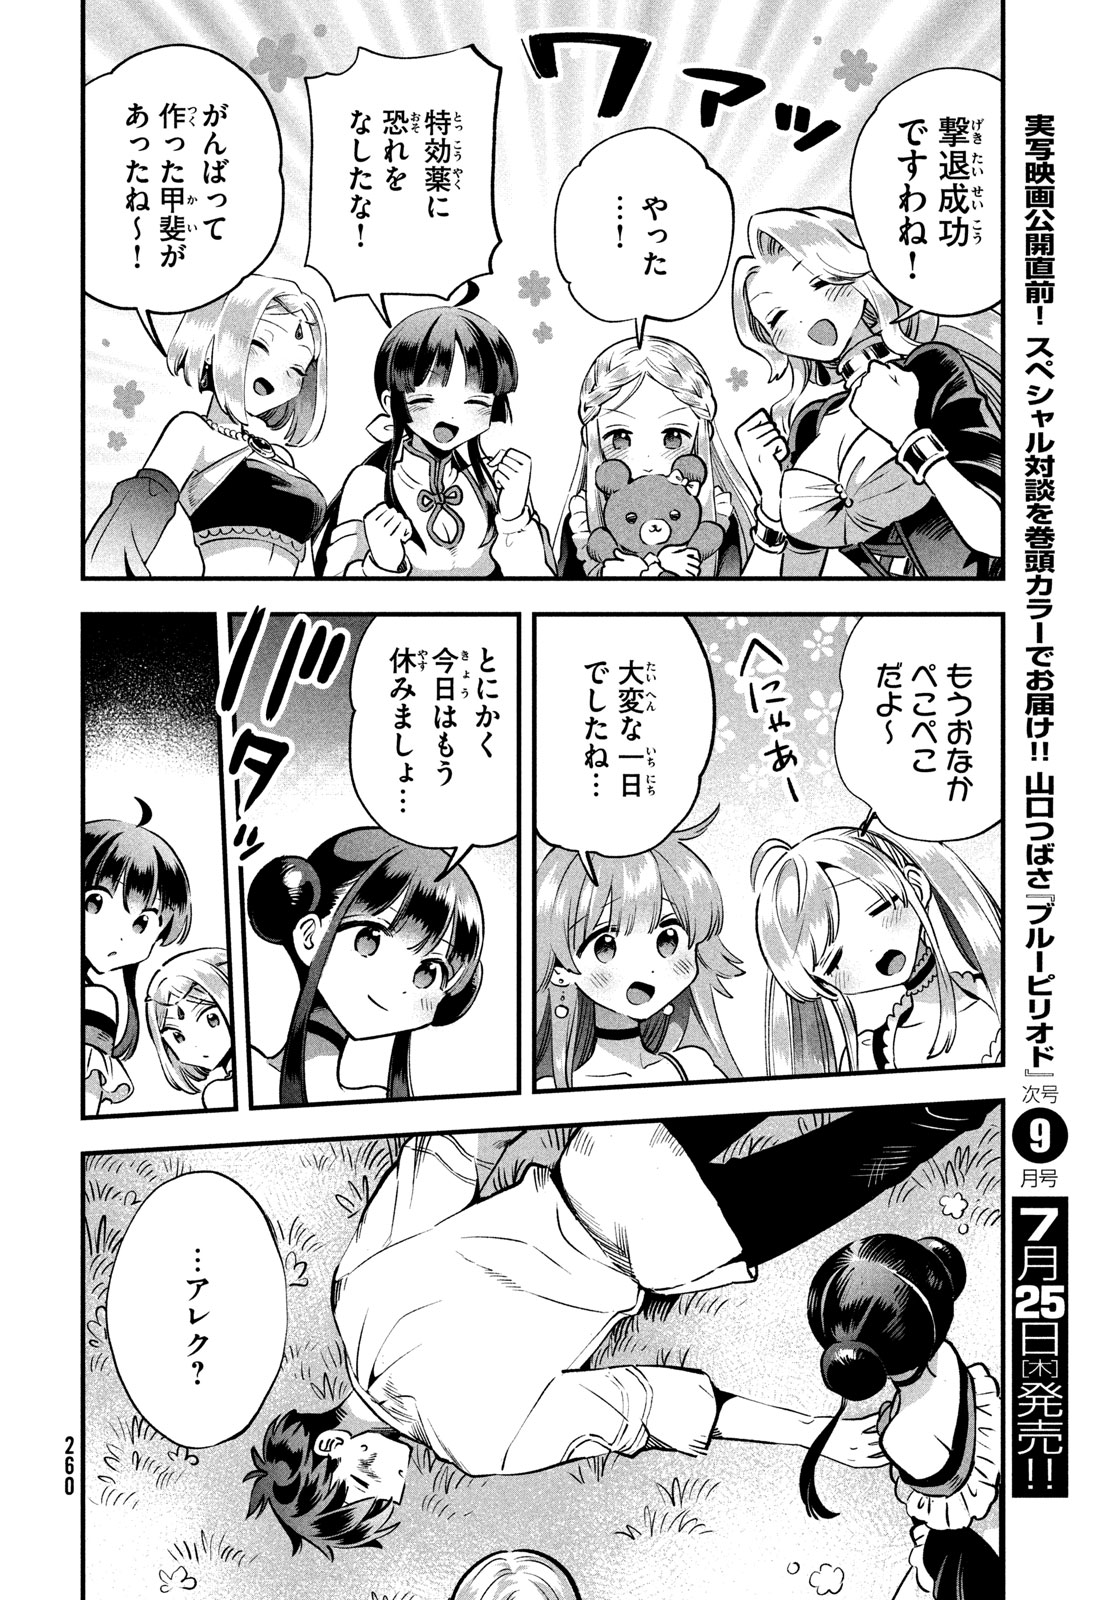 7-nin no Nemuri Hime - Chapter 48 - Page 6